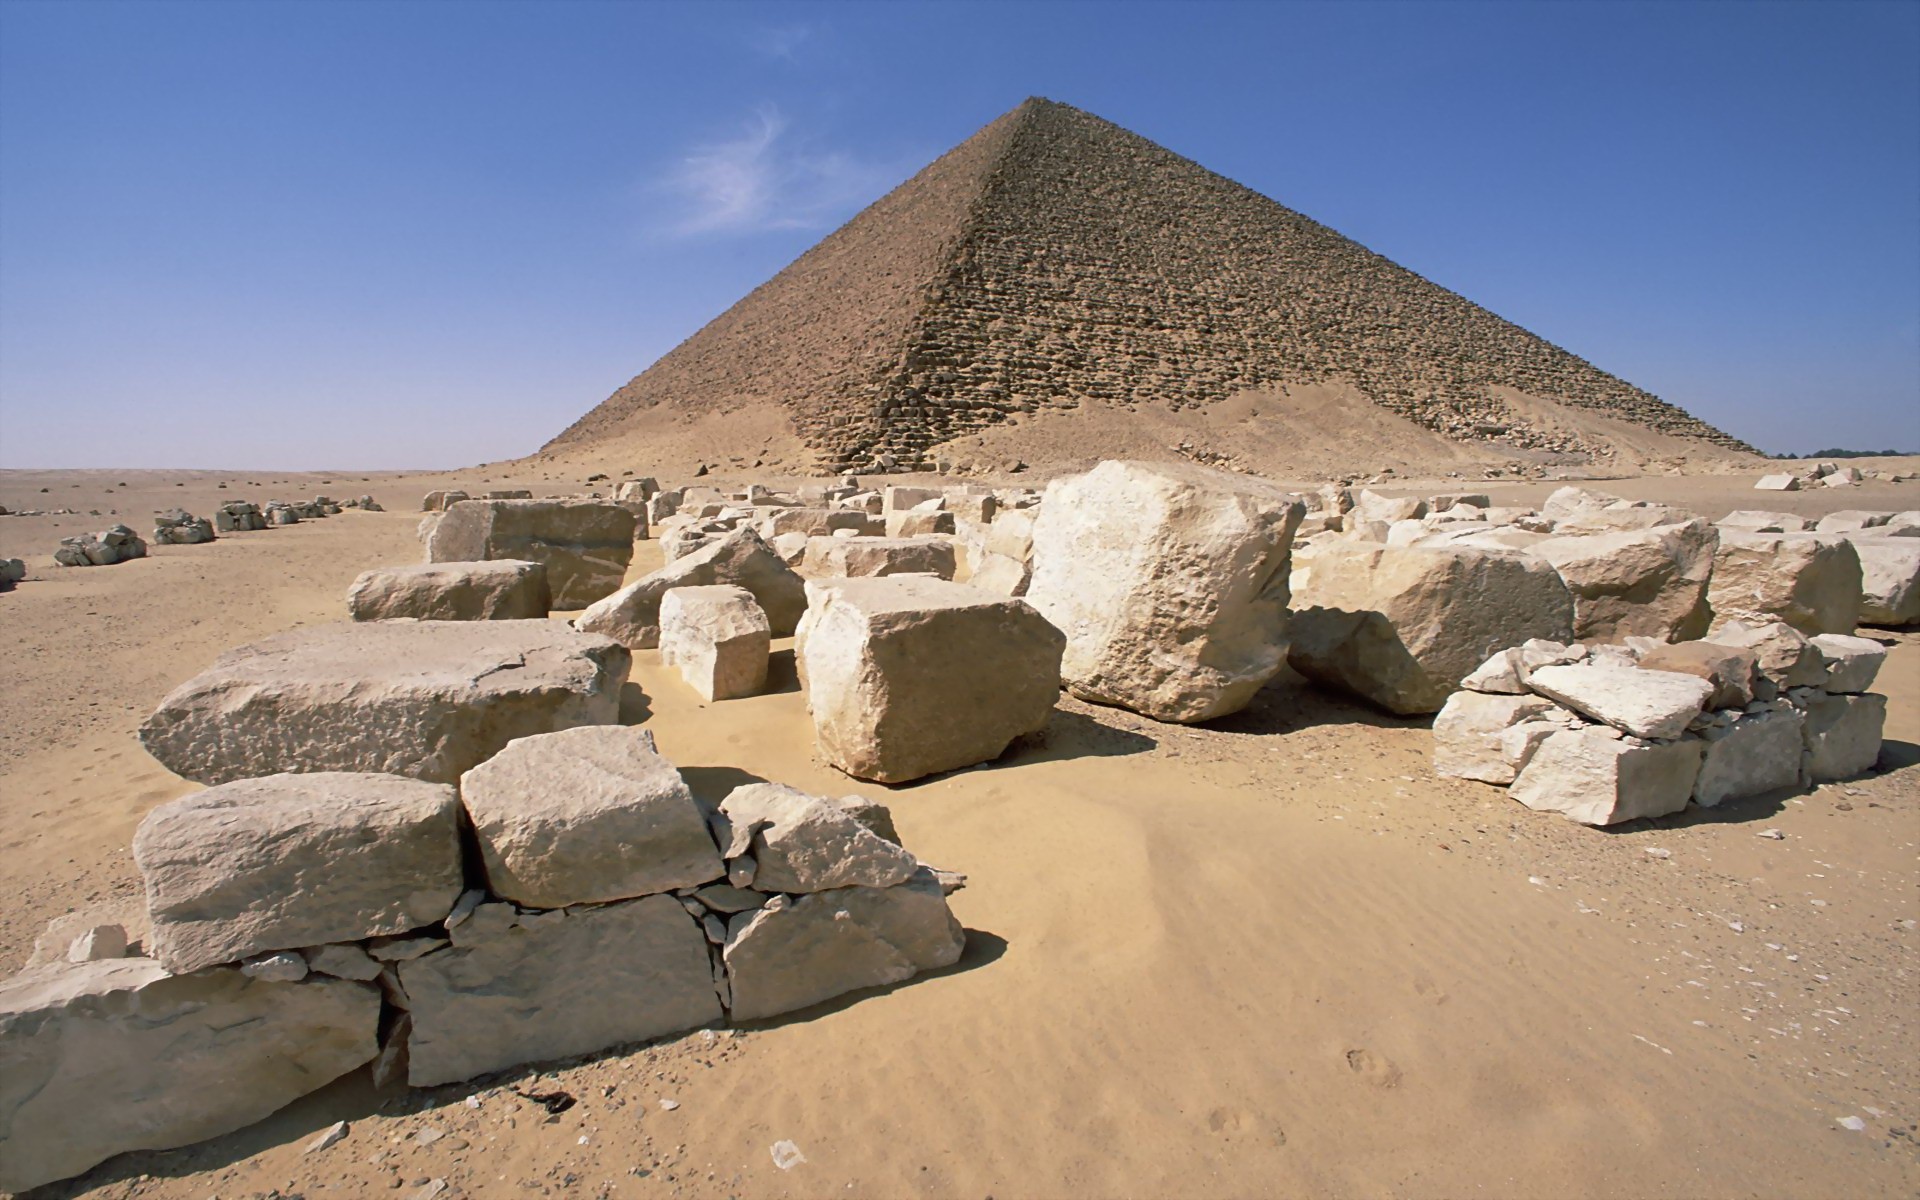 General 1920x1200 Egypt desert landscape ancient Pyramids of Giza pyramid history stones landmark World Heritage Site Africa